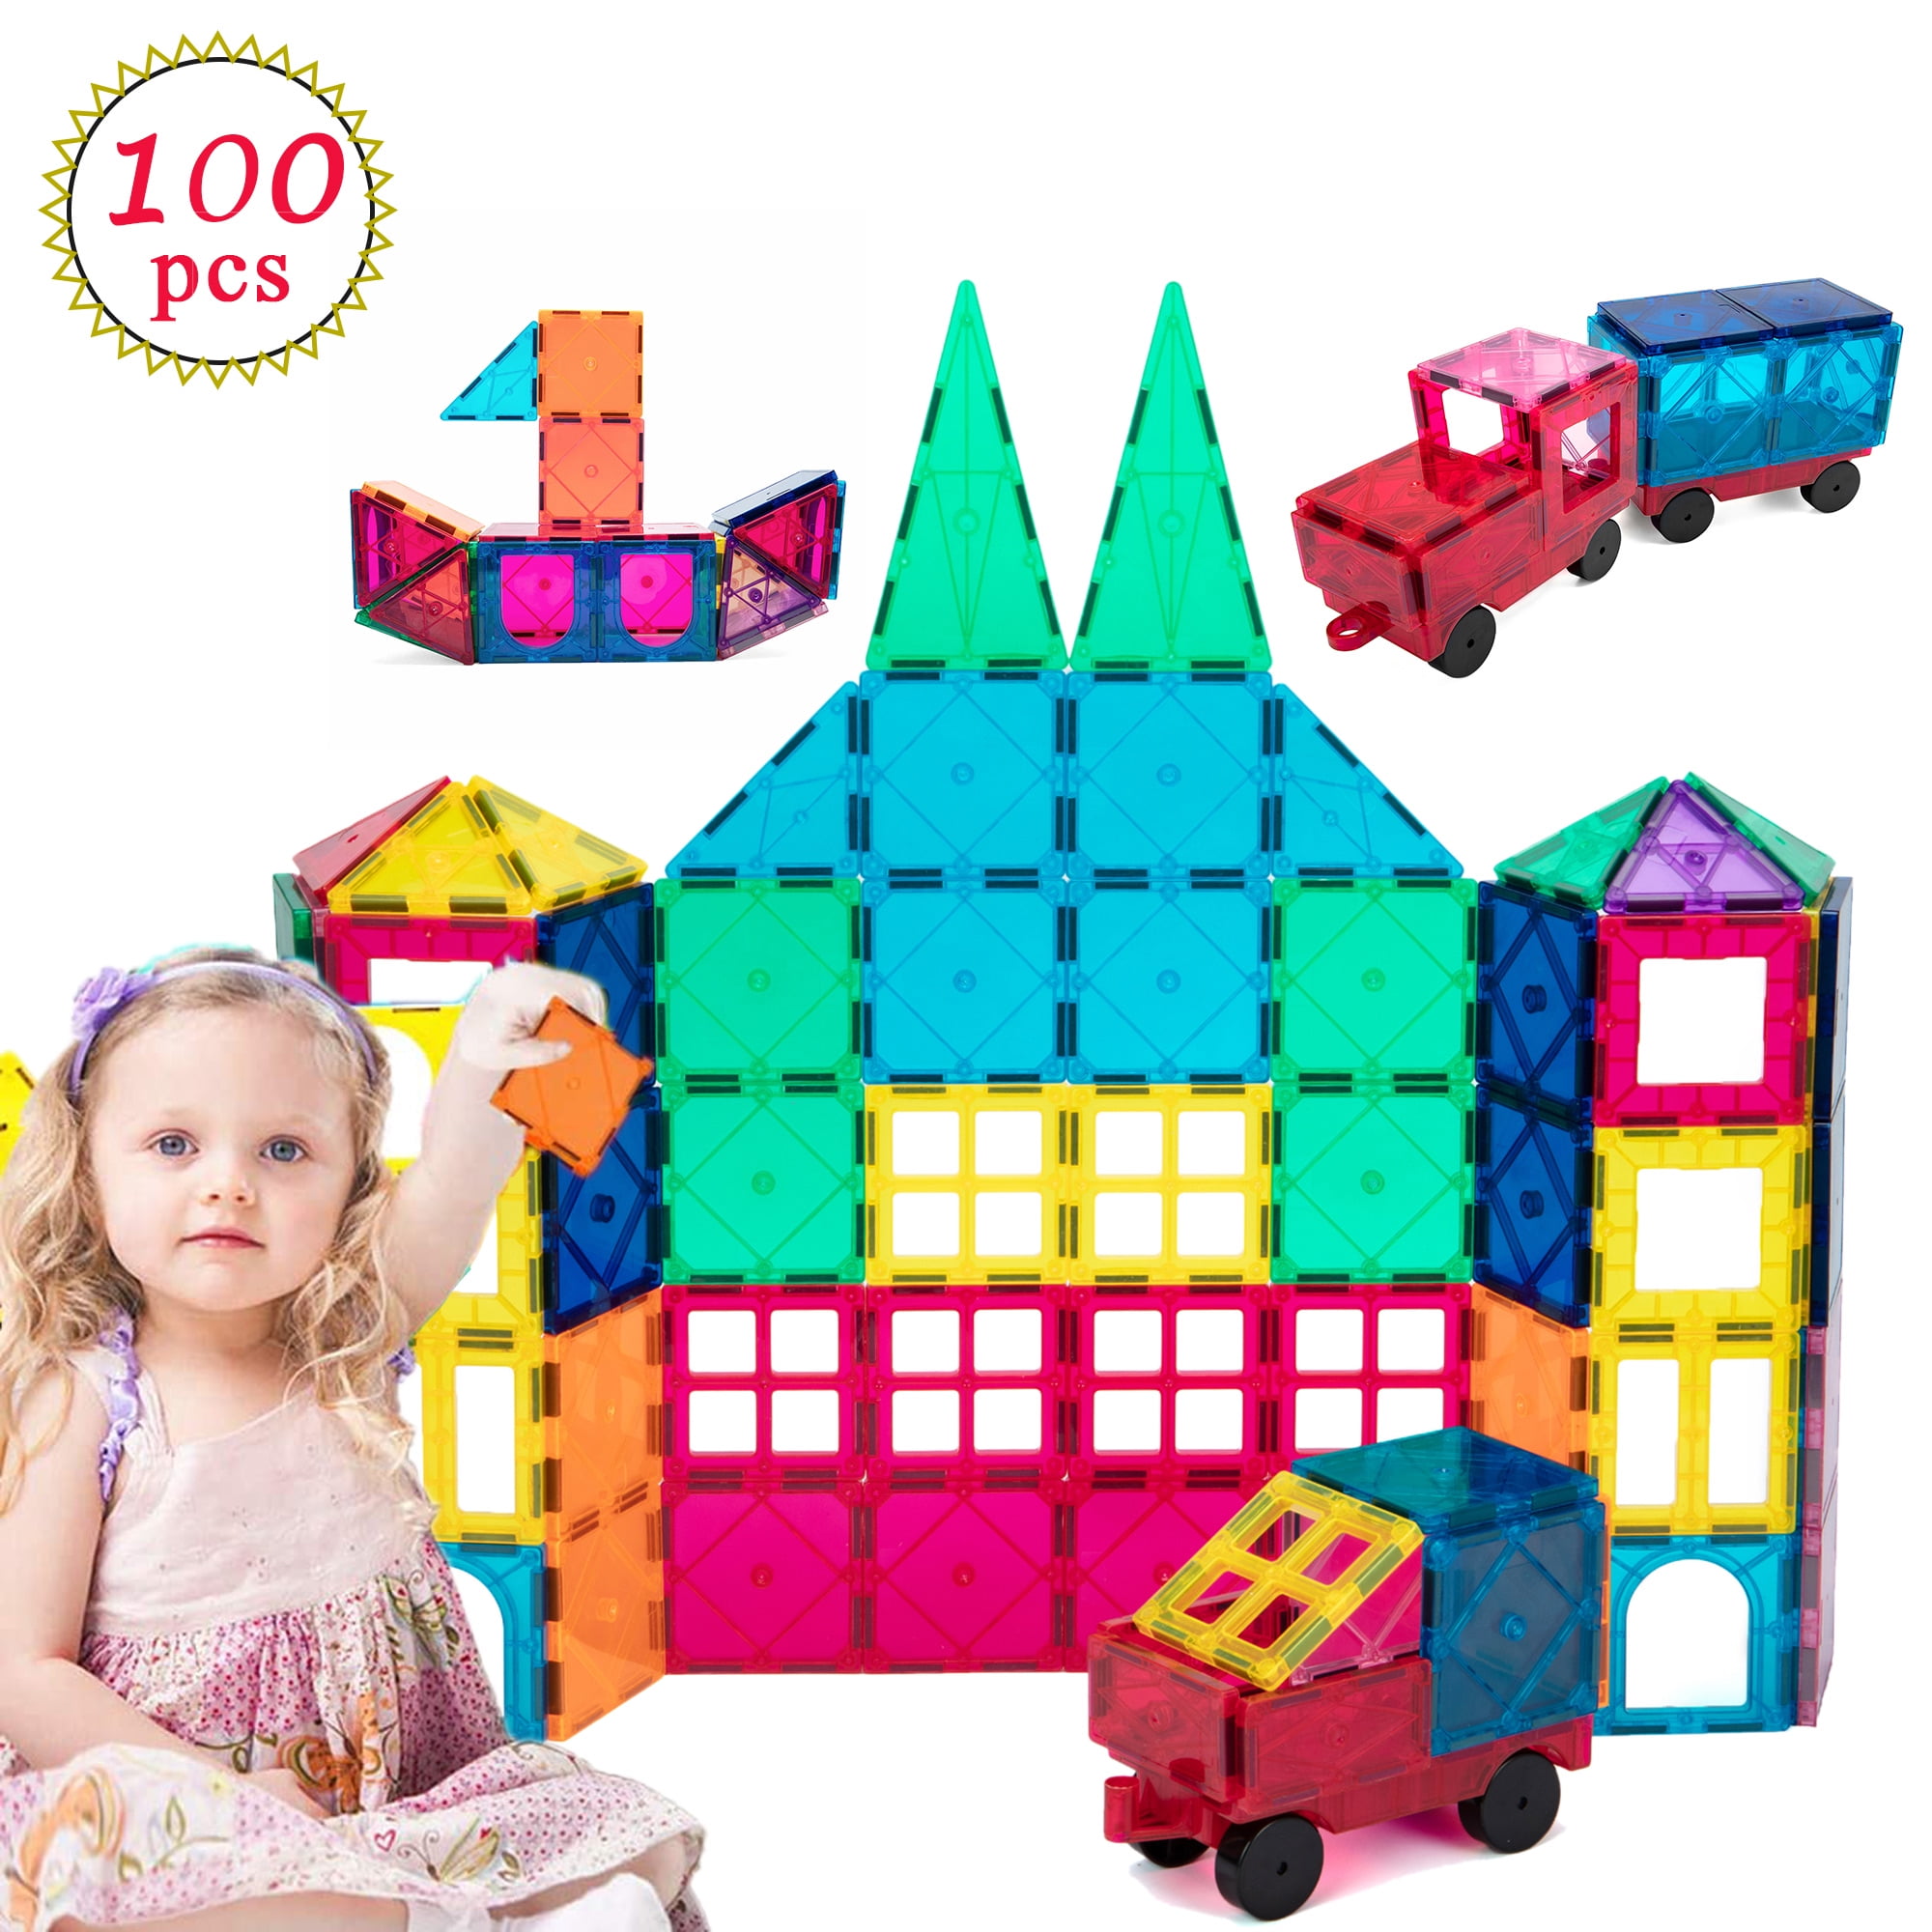 Year Old Boys and Girls Building Construction Educational STEM Toys for 3 100Pcs 3D Magnetic Building Blocks Tiles Set Kids Magnetic Tiles Toys